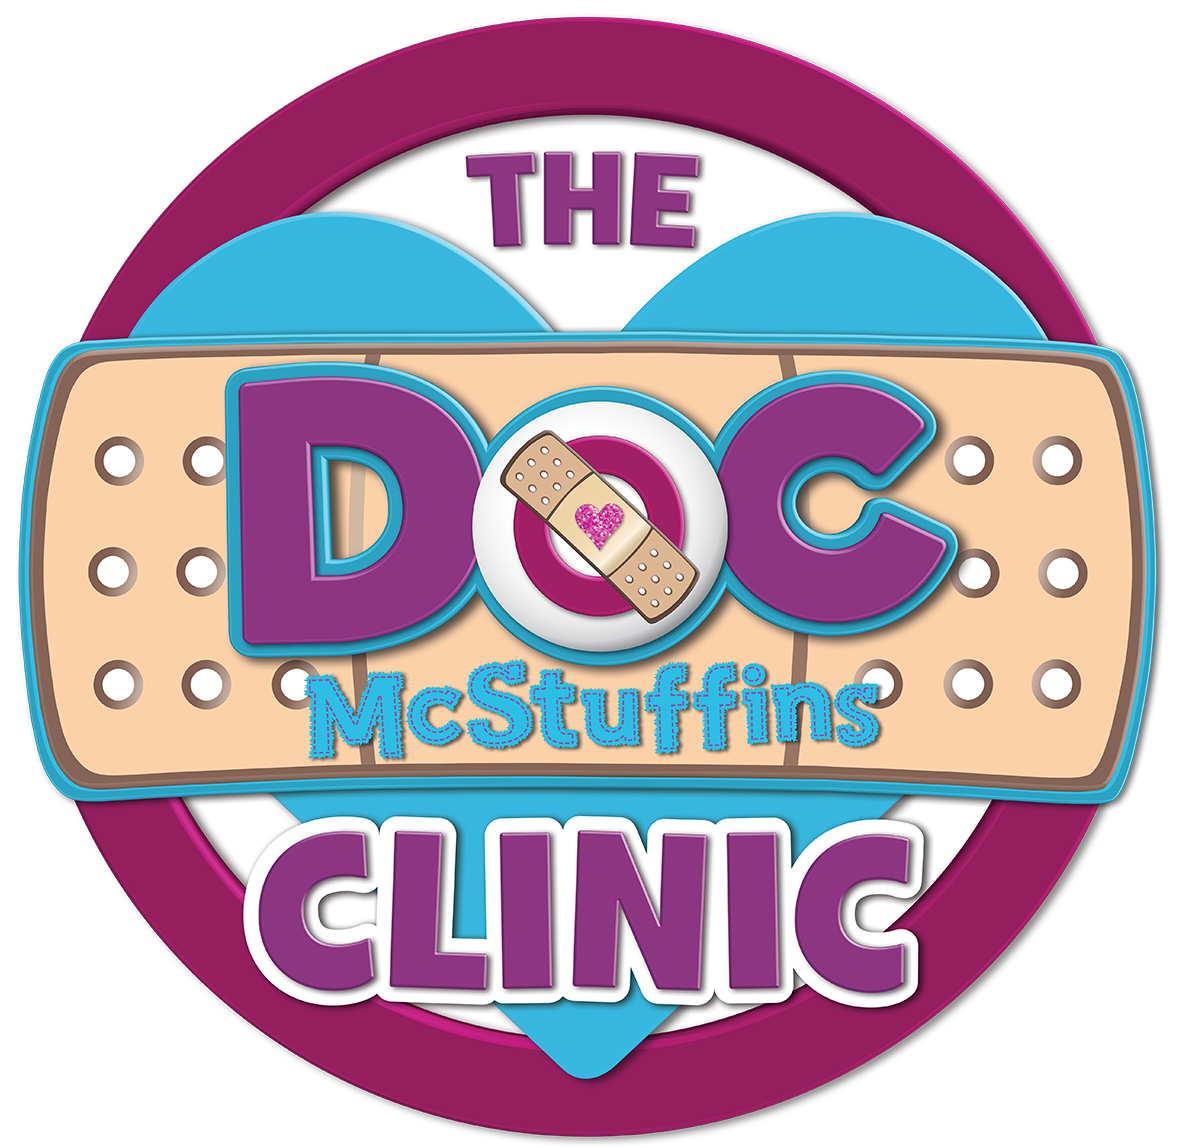 Clinic free sign printable. Doc mcstuffins clipart doctor mcstuffin